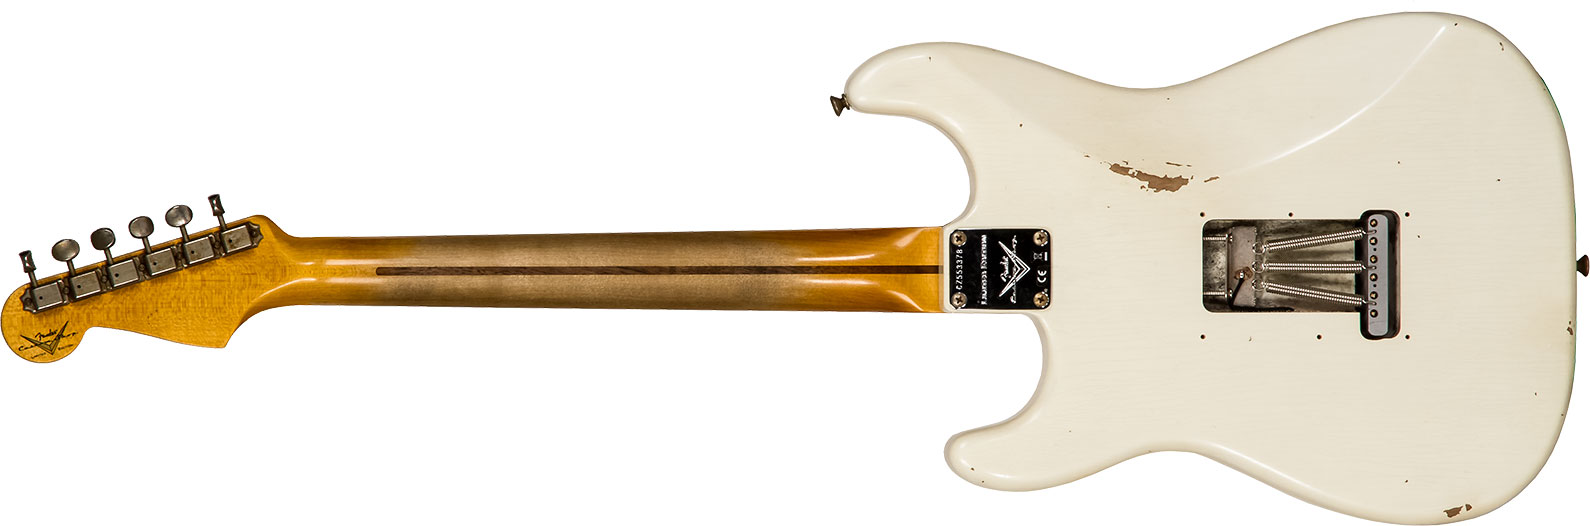 Fender Custom Shop Strat Poblano Ii 3s Trem Mn #cz555378 - Relic Olympic White - Guitare Électrique Forme Str - Variation 1